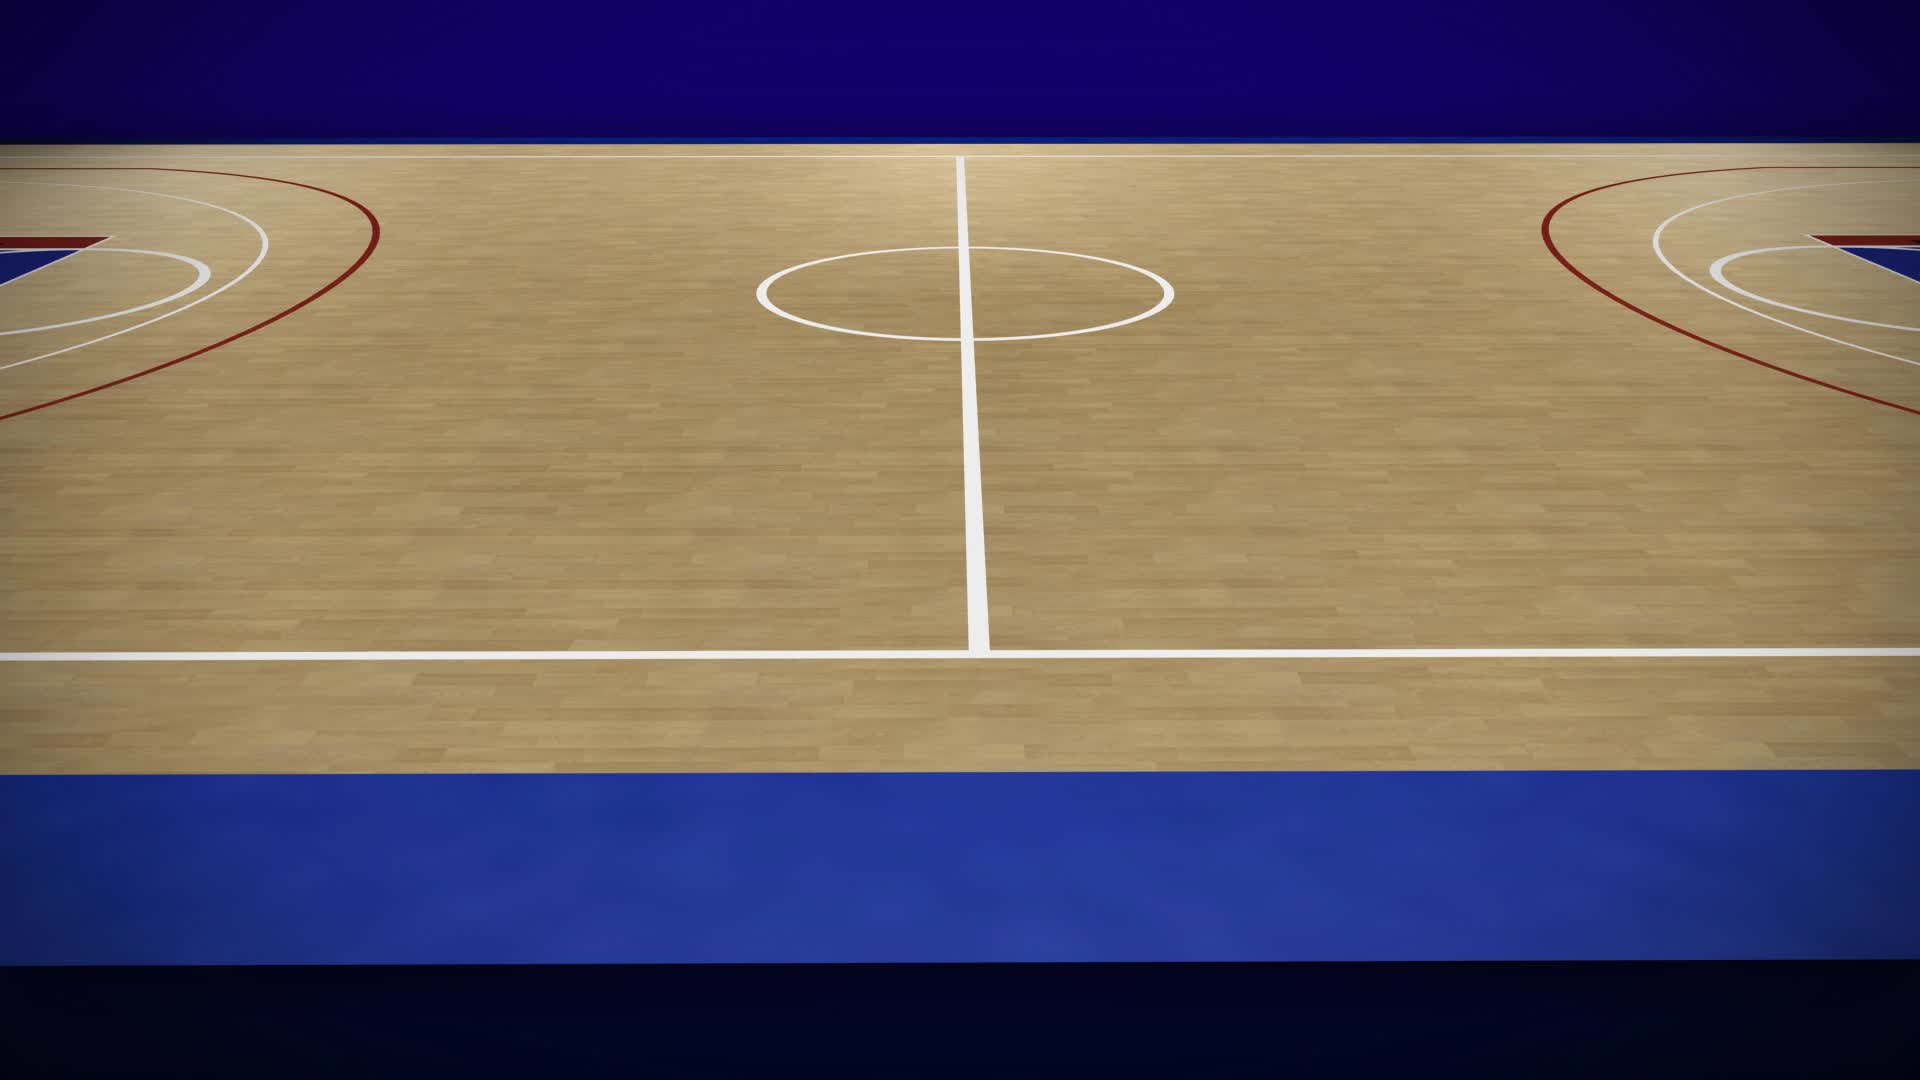 Basketball court animation ~ Stock Video #12268785 | Pond5